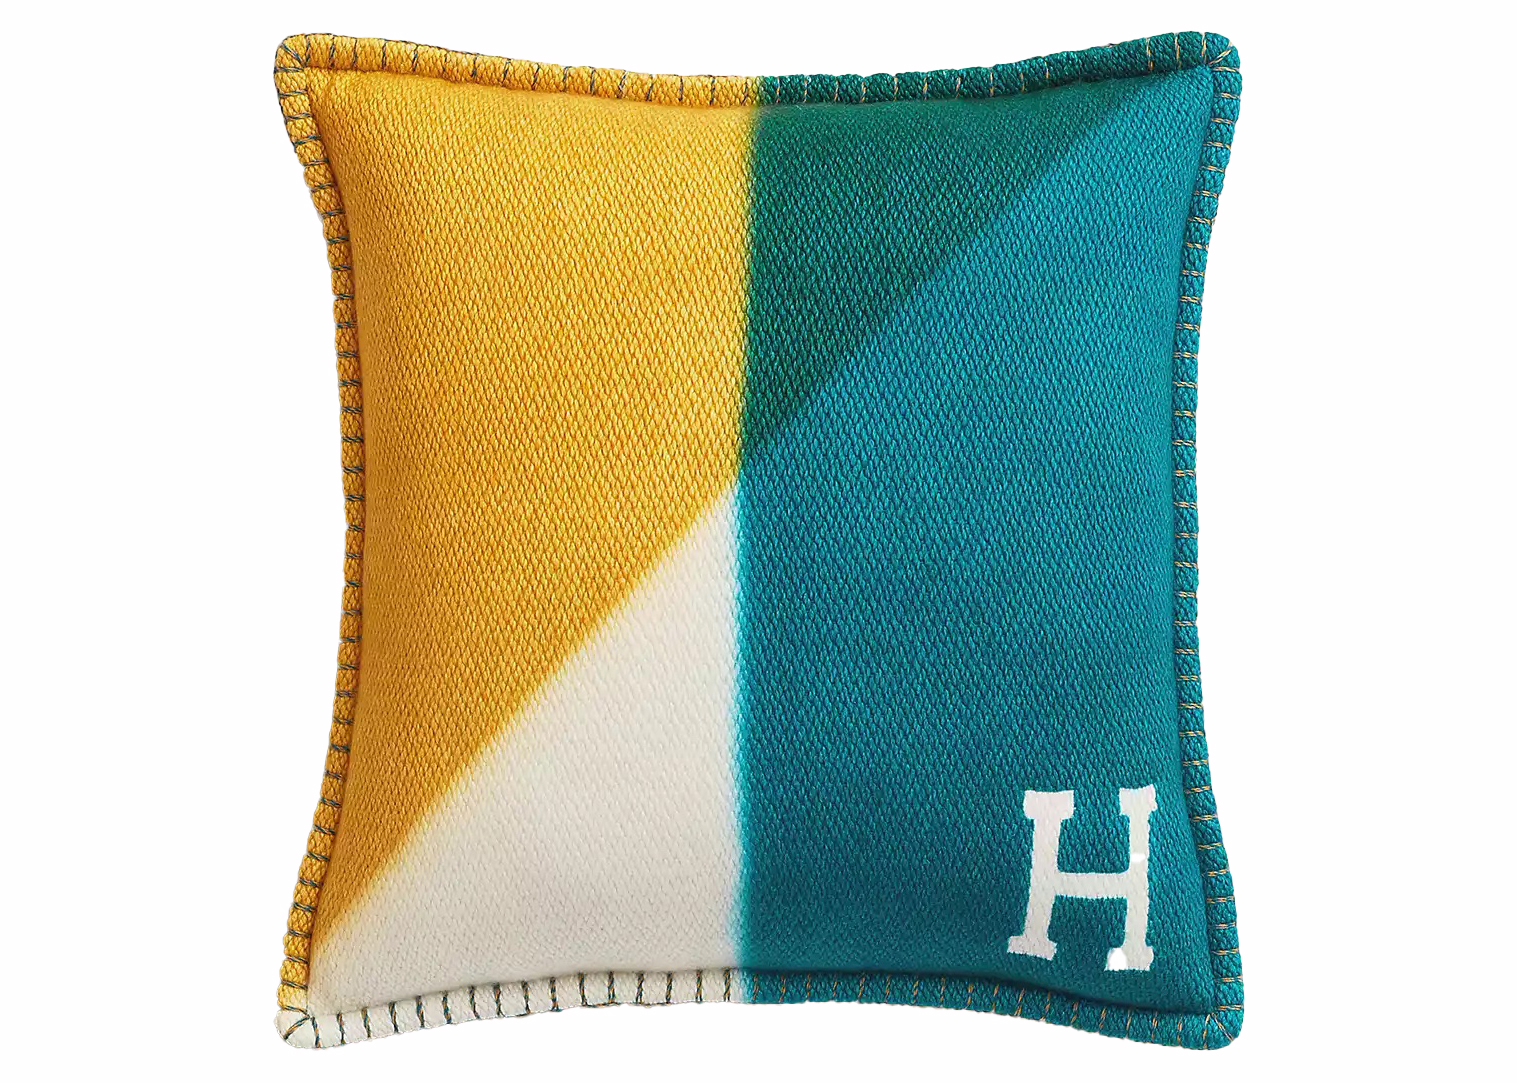 Hermes Avalon Tangram Pillow Soleil/Emeraude in 100% Cashmere Wool